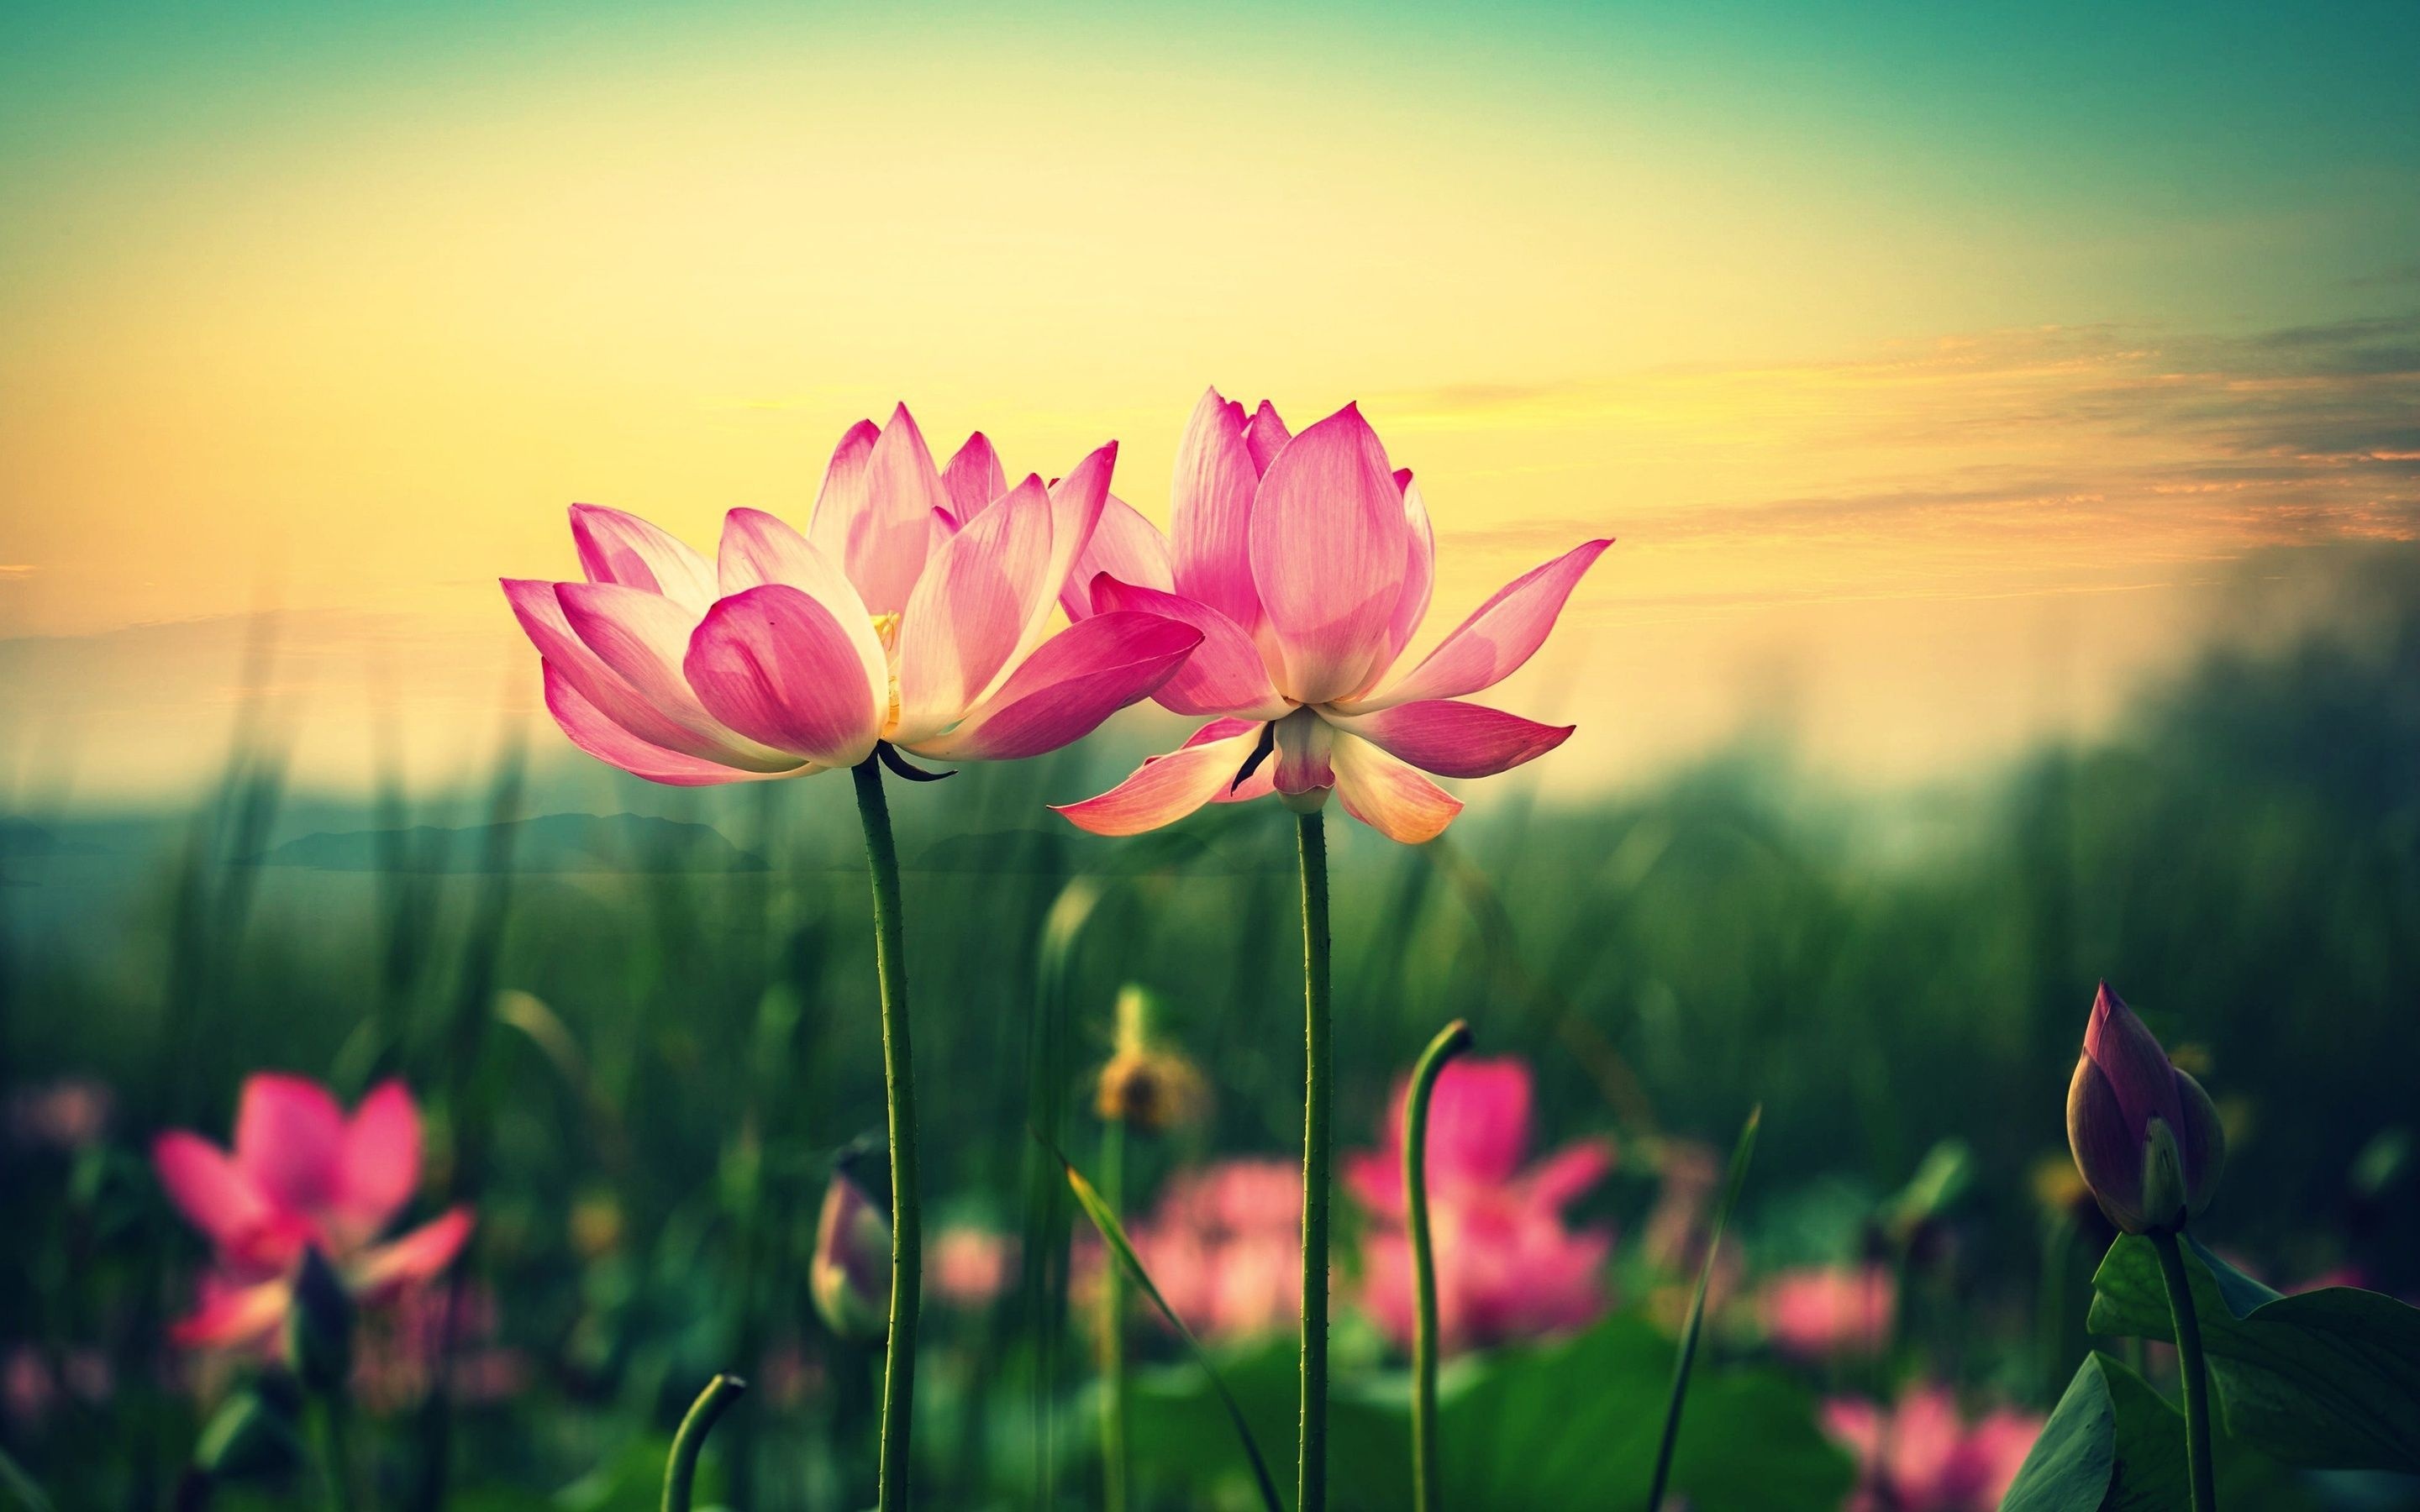 Lotus flower wallpaper, Artistic design, Floral perfection, Refreshing visuals, 2880x1800 HD Desktop